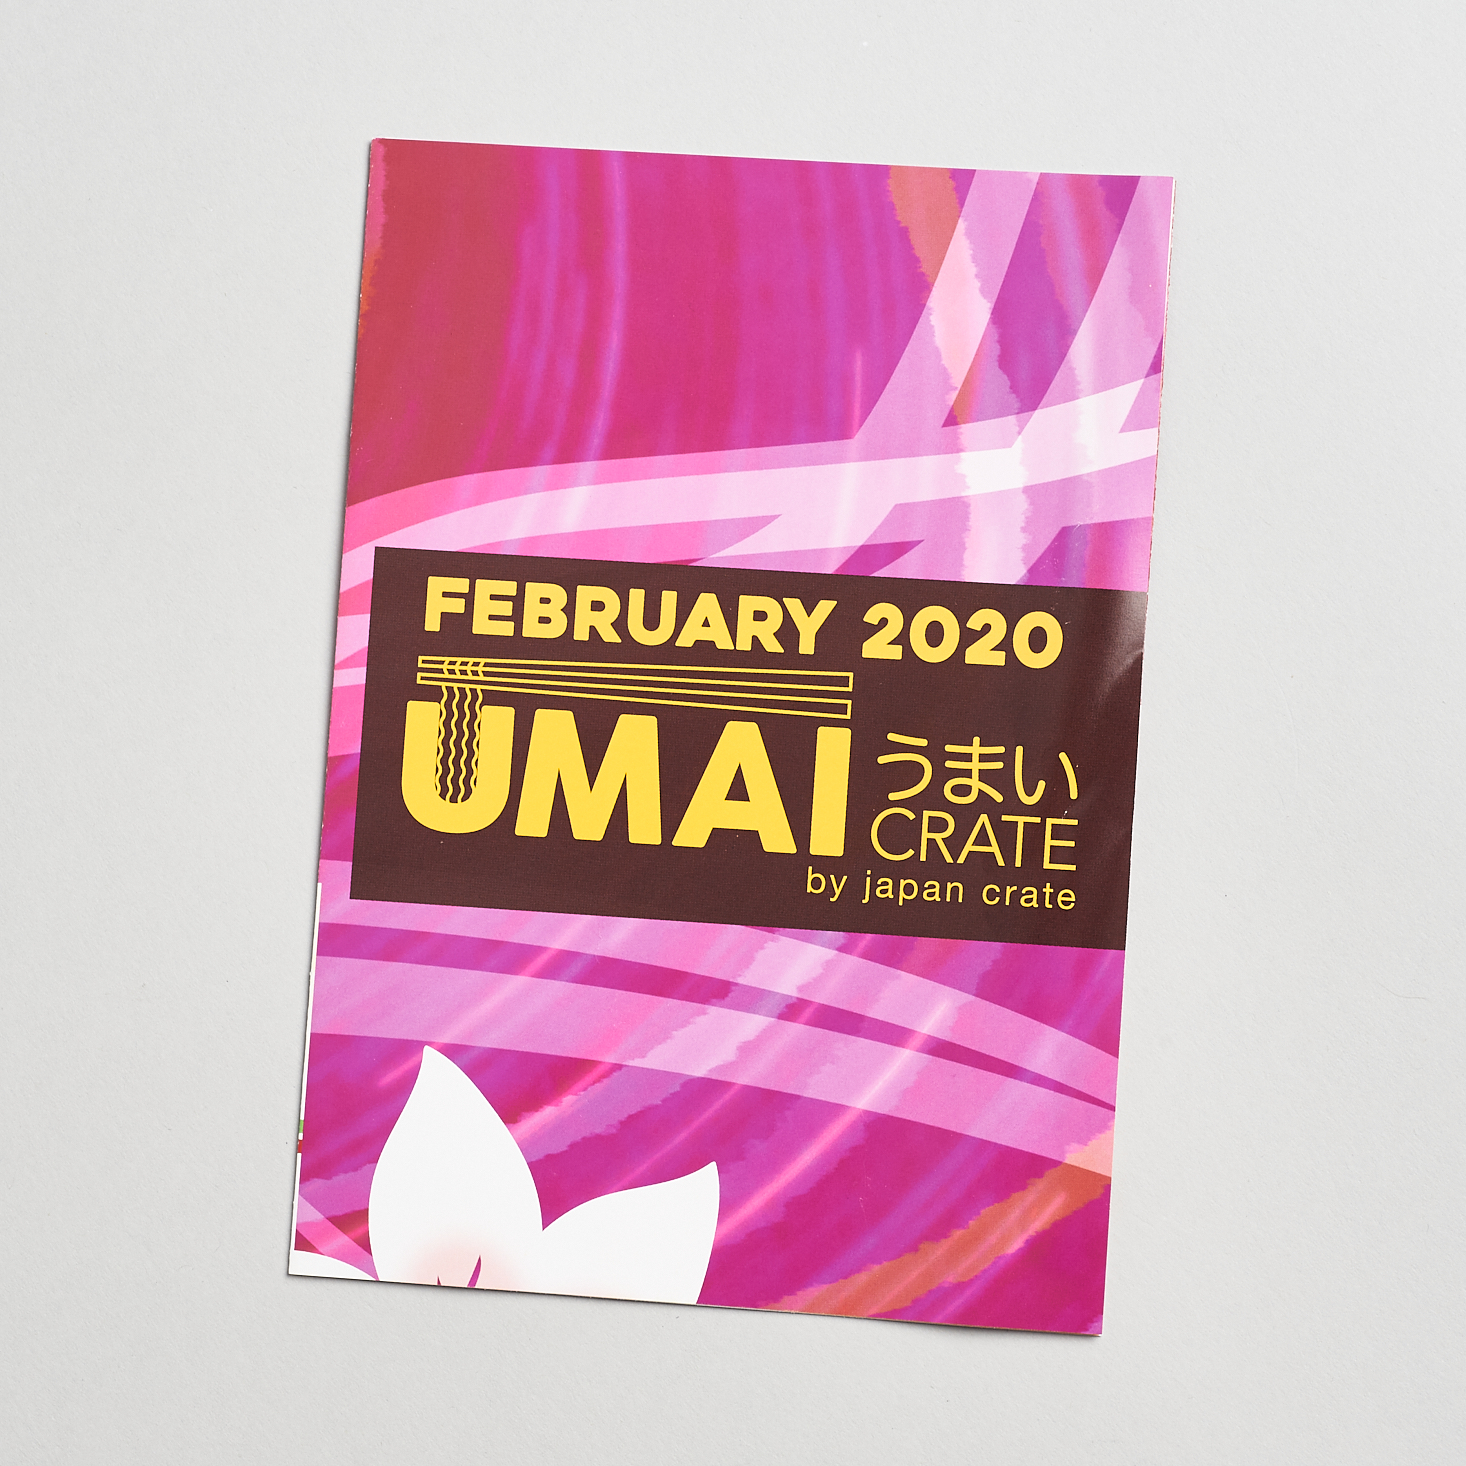 Umai Crate February 2020 - info booklet cover